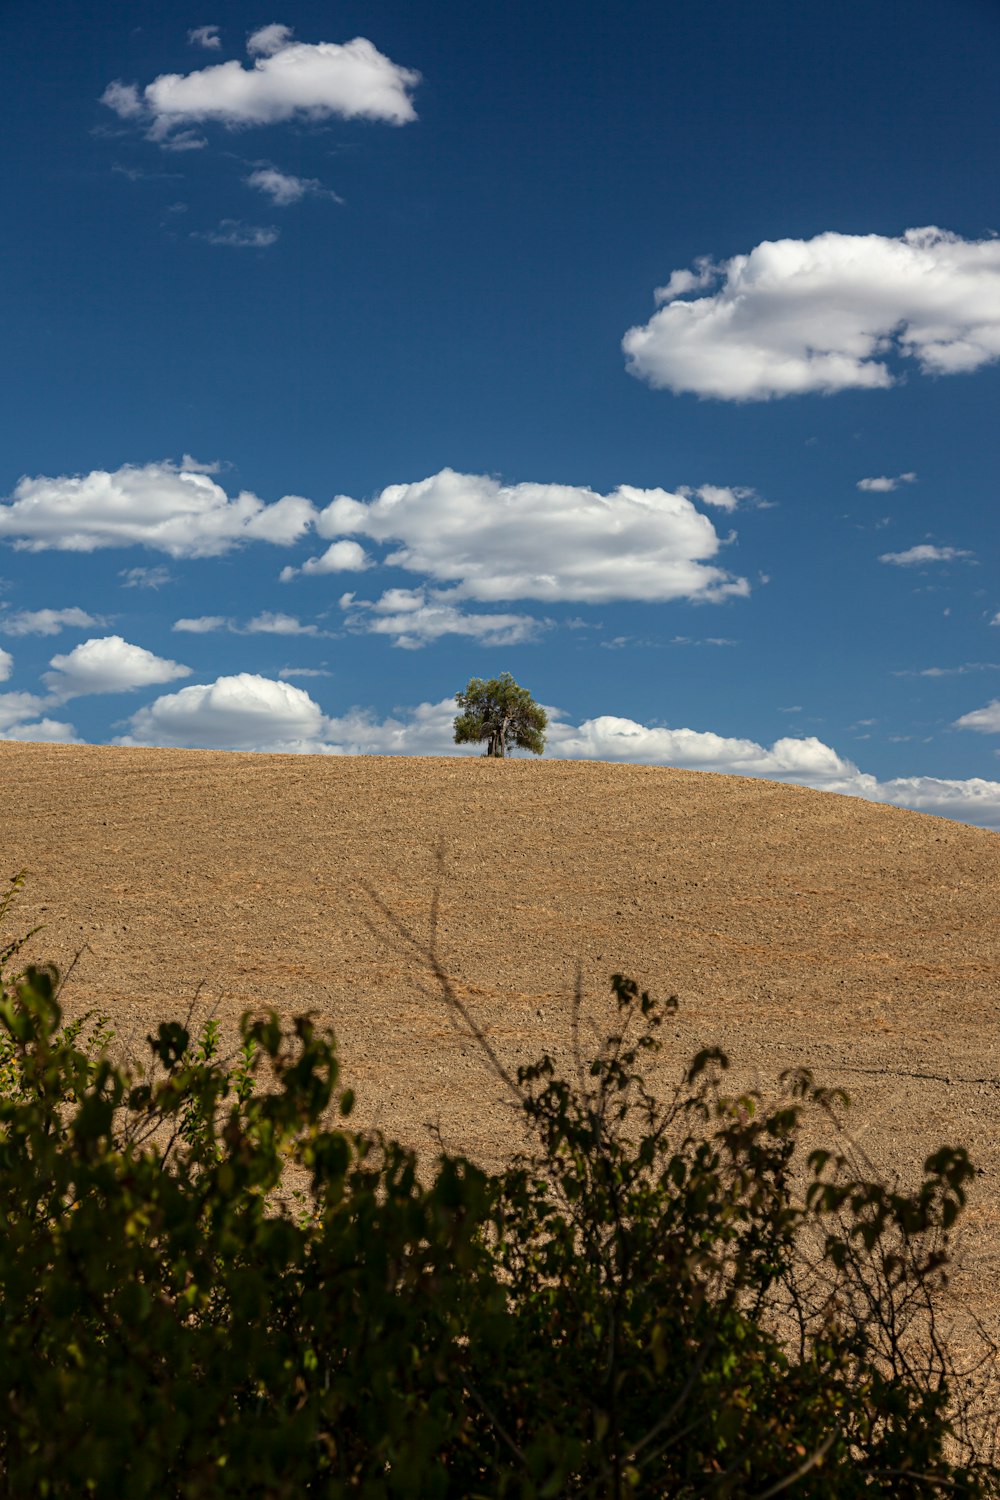 a tree on a hill